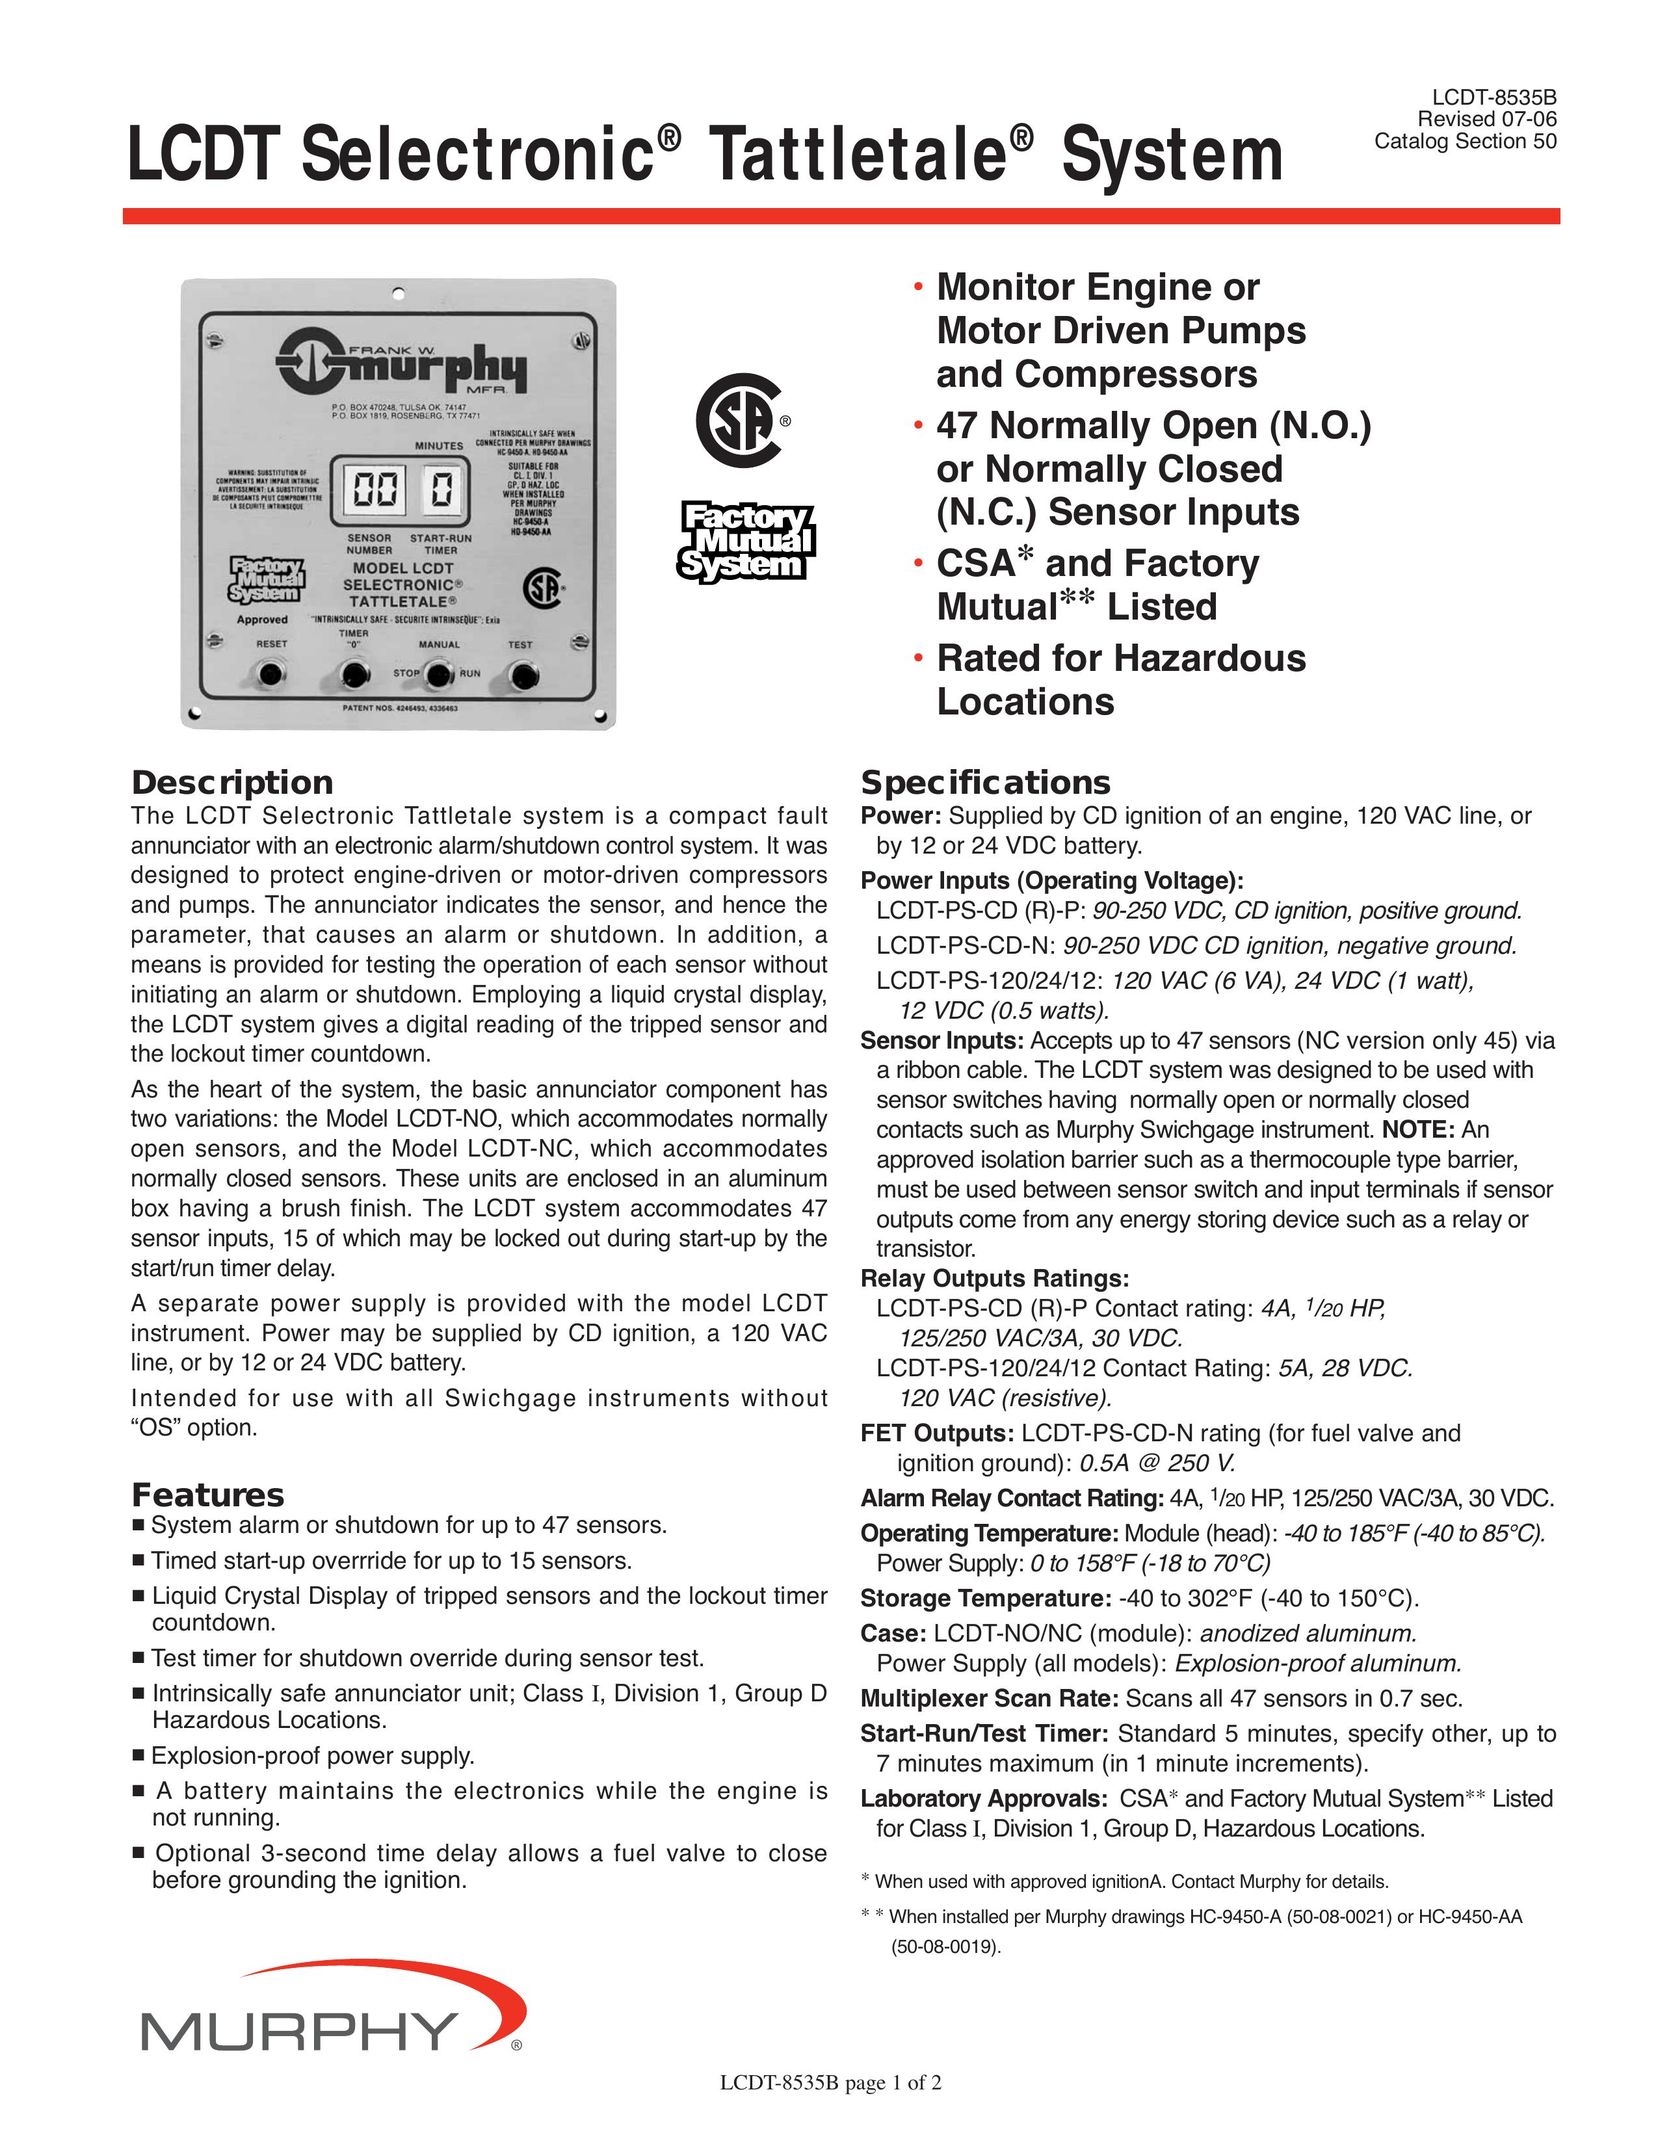 Murphy LCDT-8535B Network Card User Manual